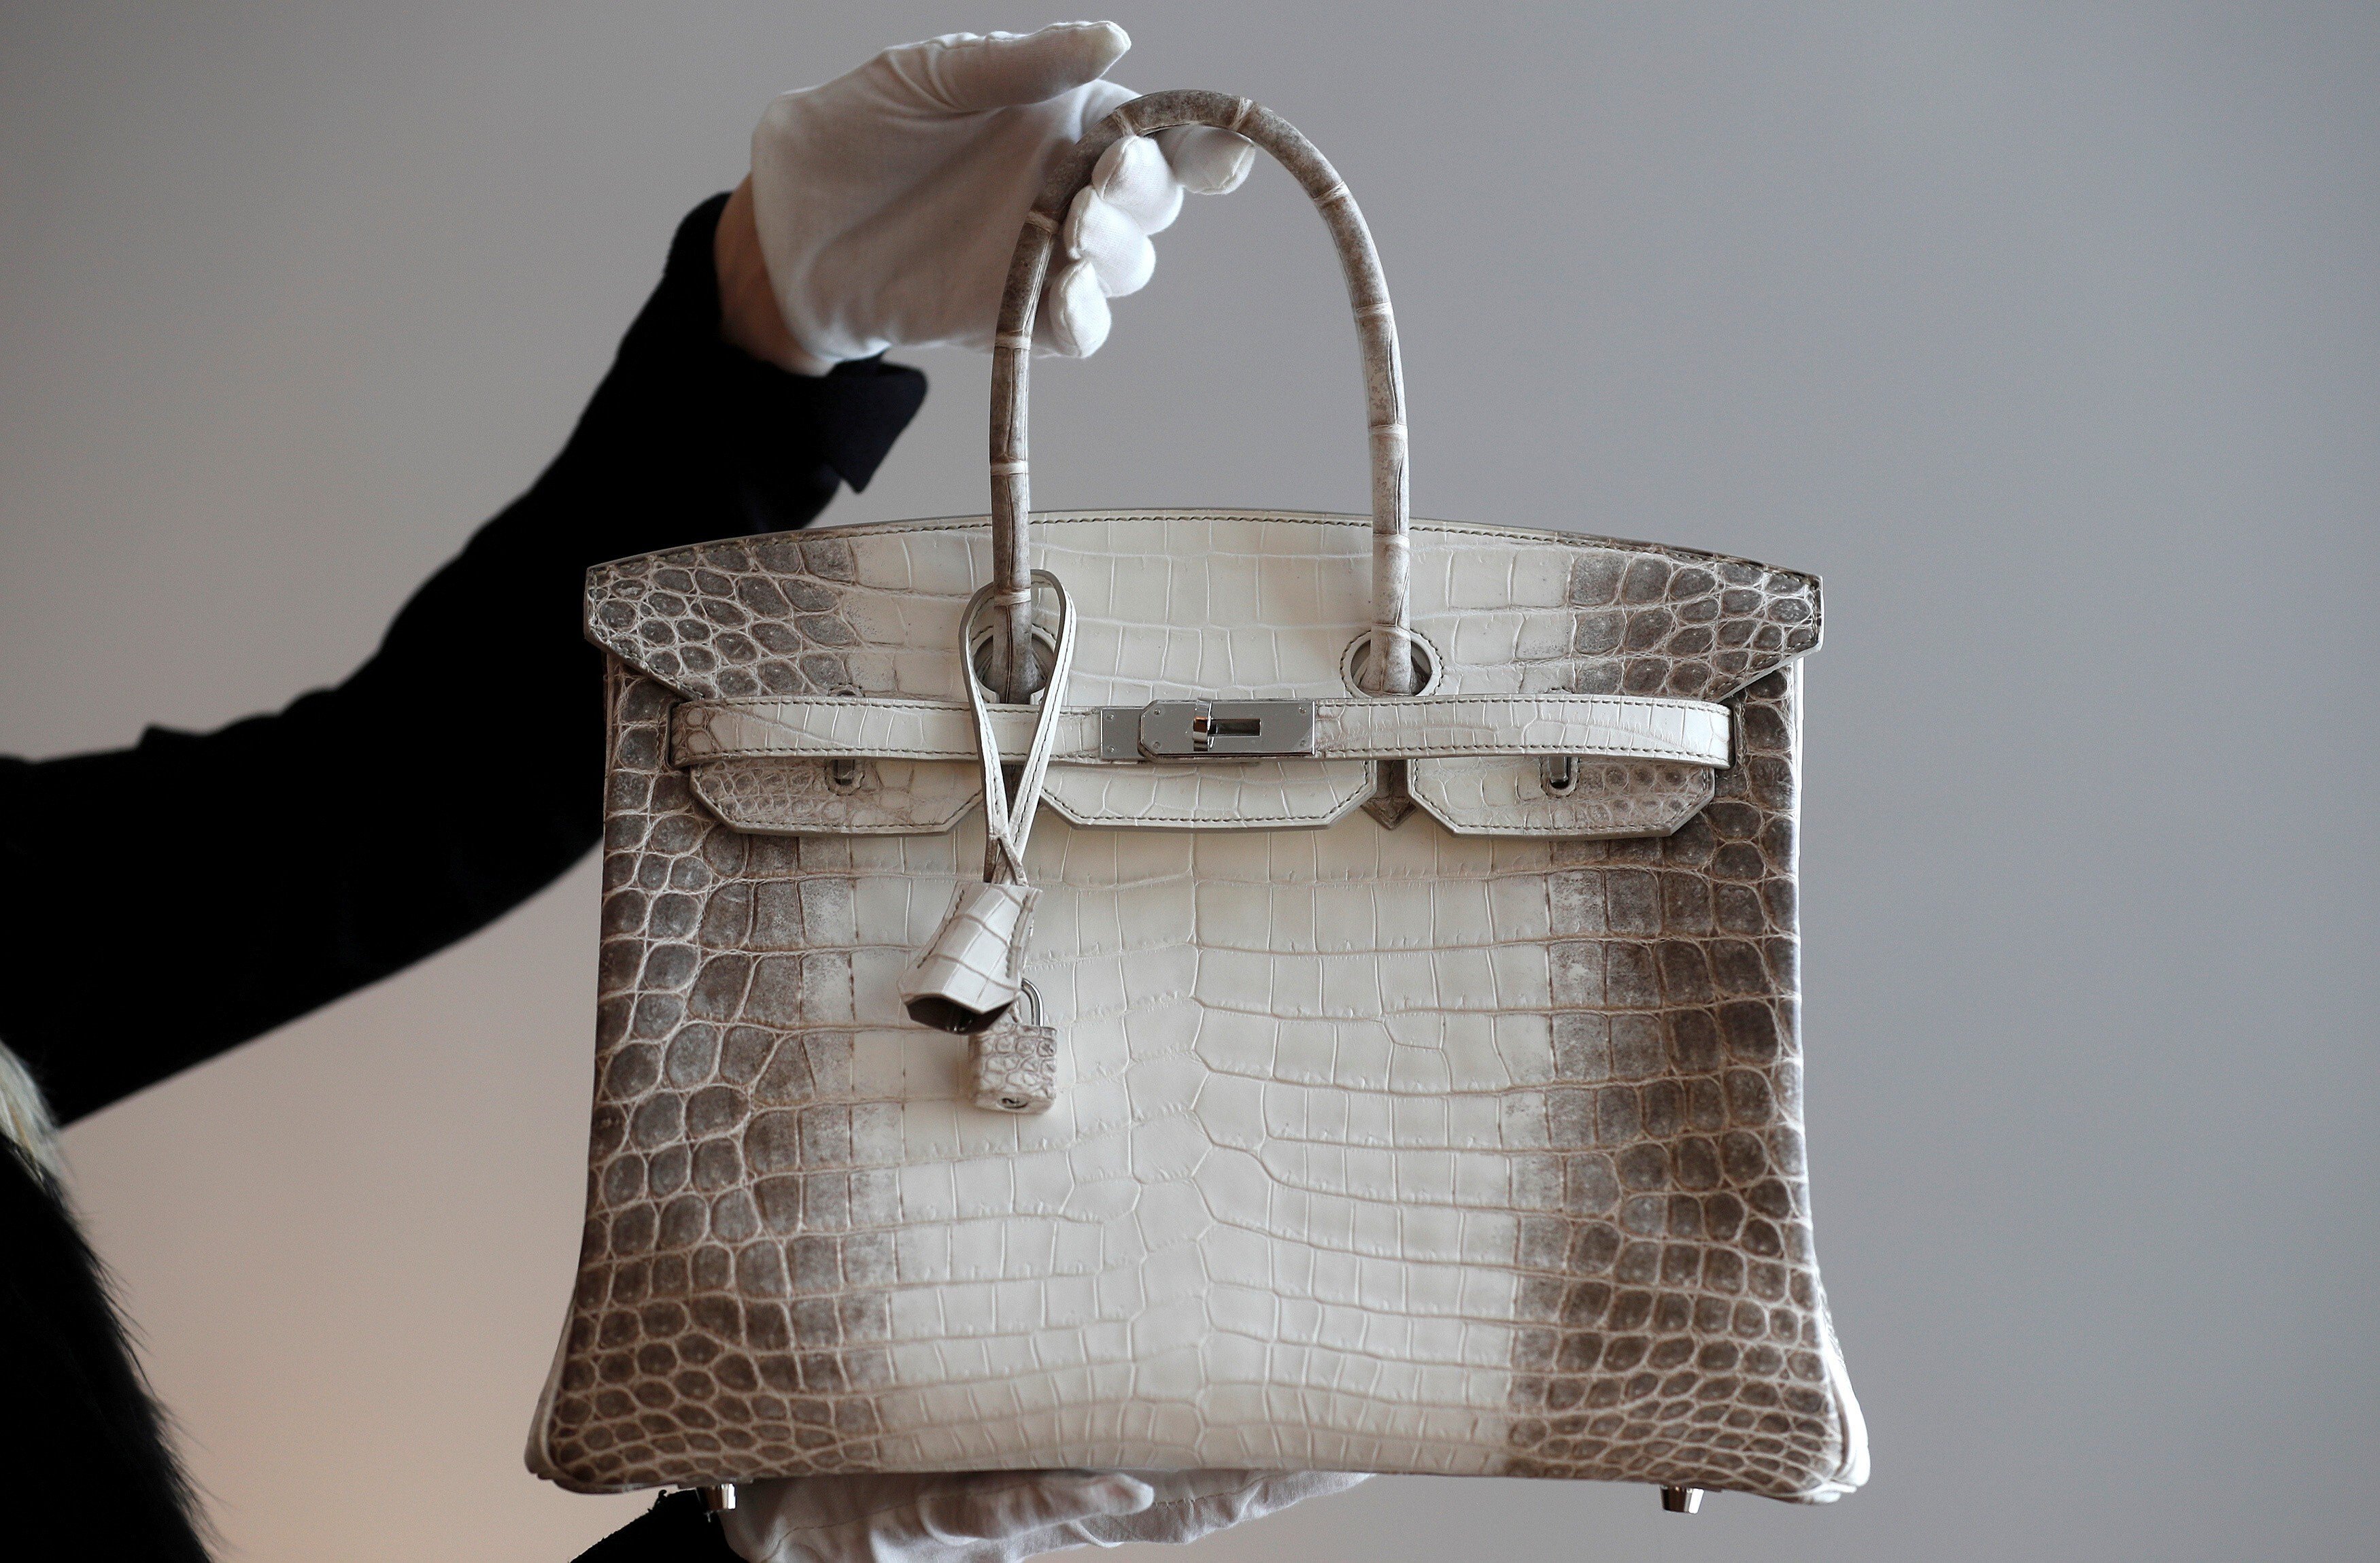 Hermès to make vegan leather handbags from mushrooms – luxury